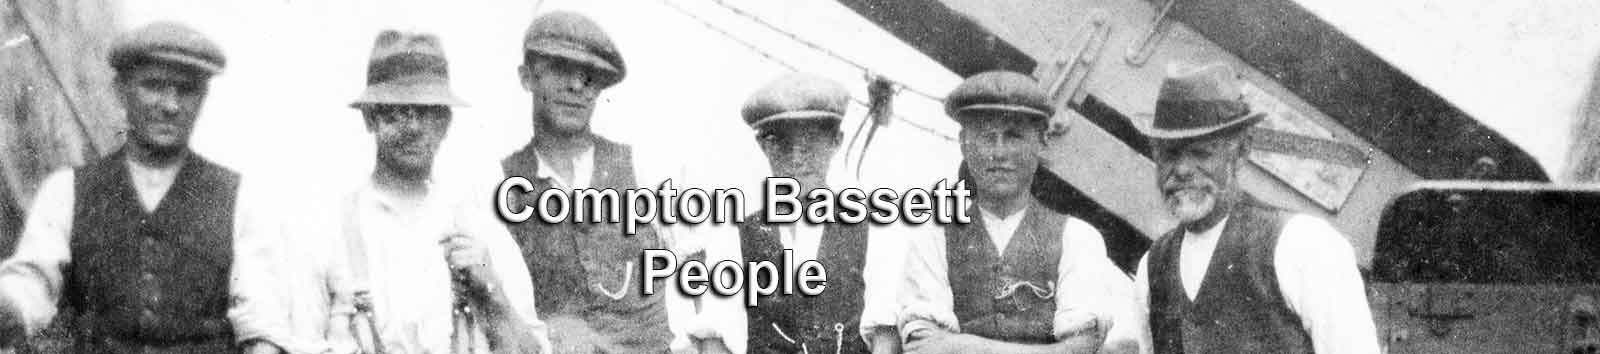 Compton bassett people